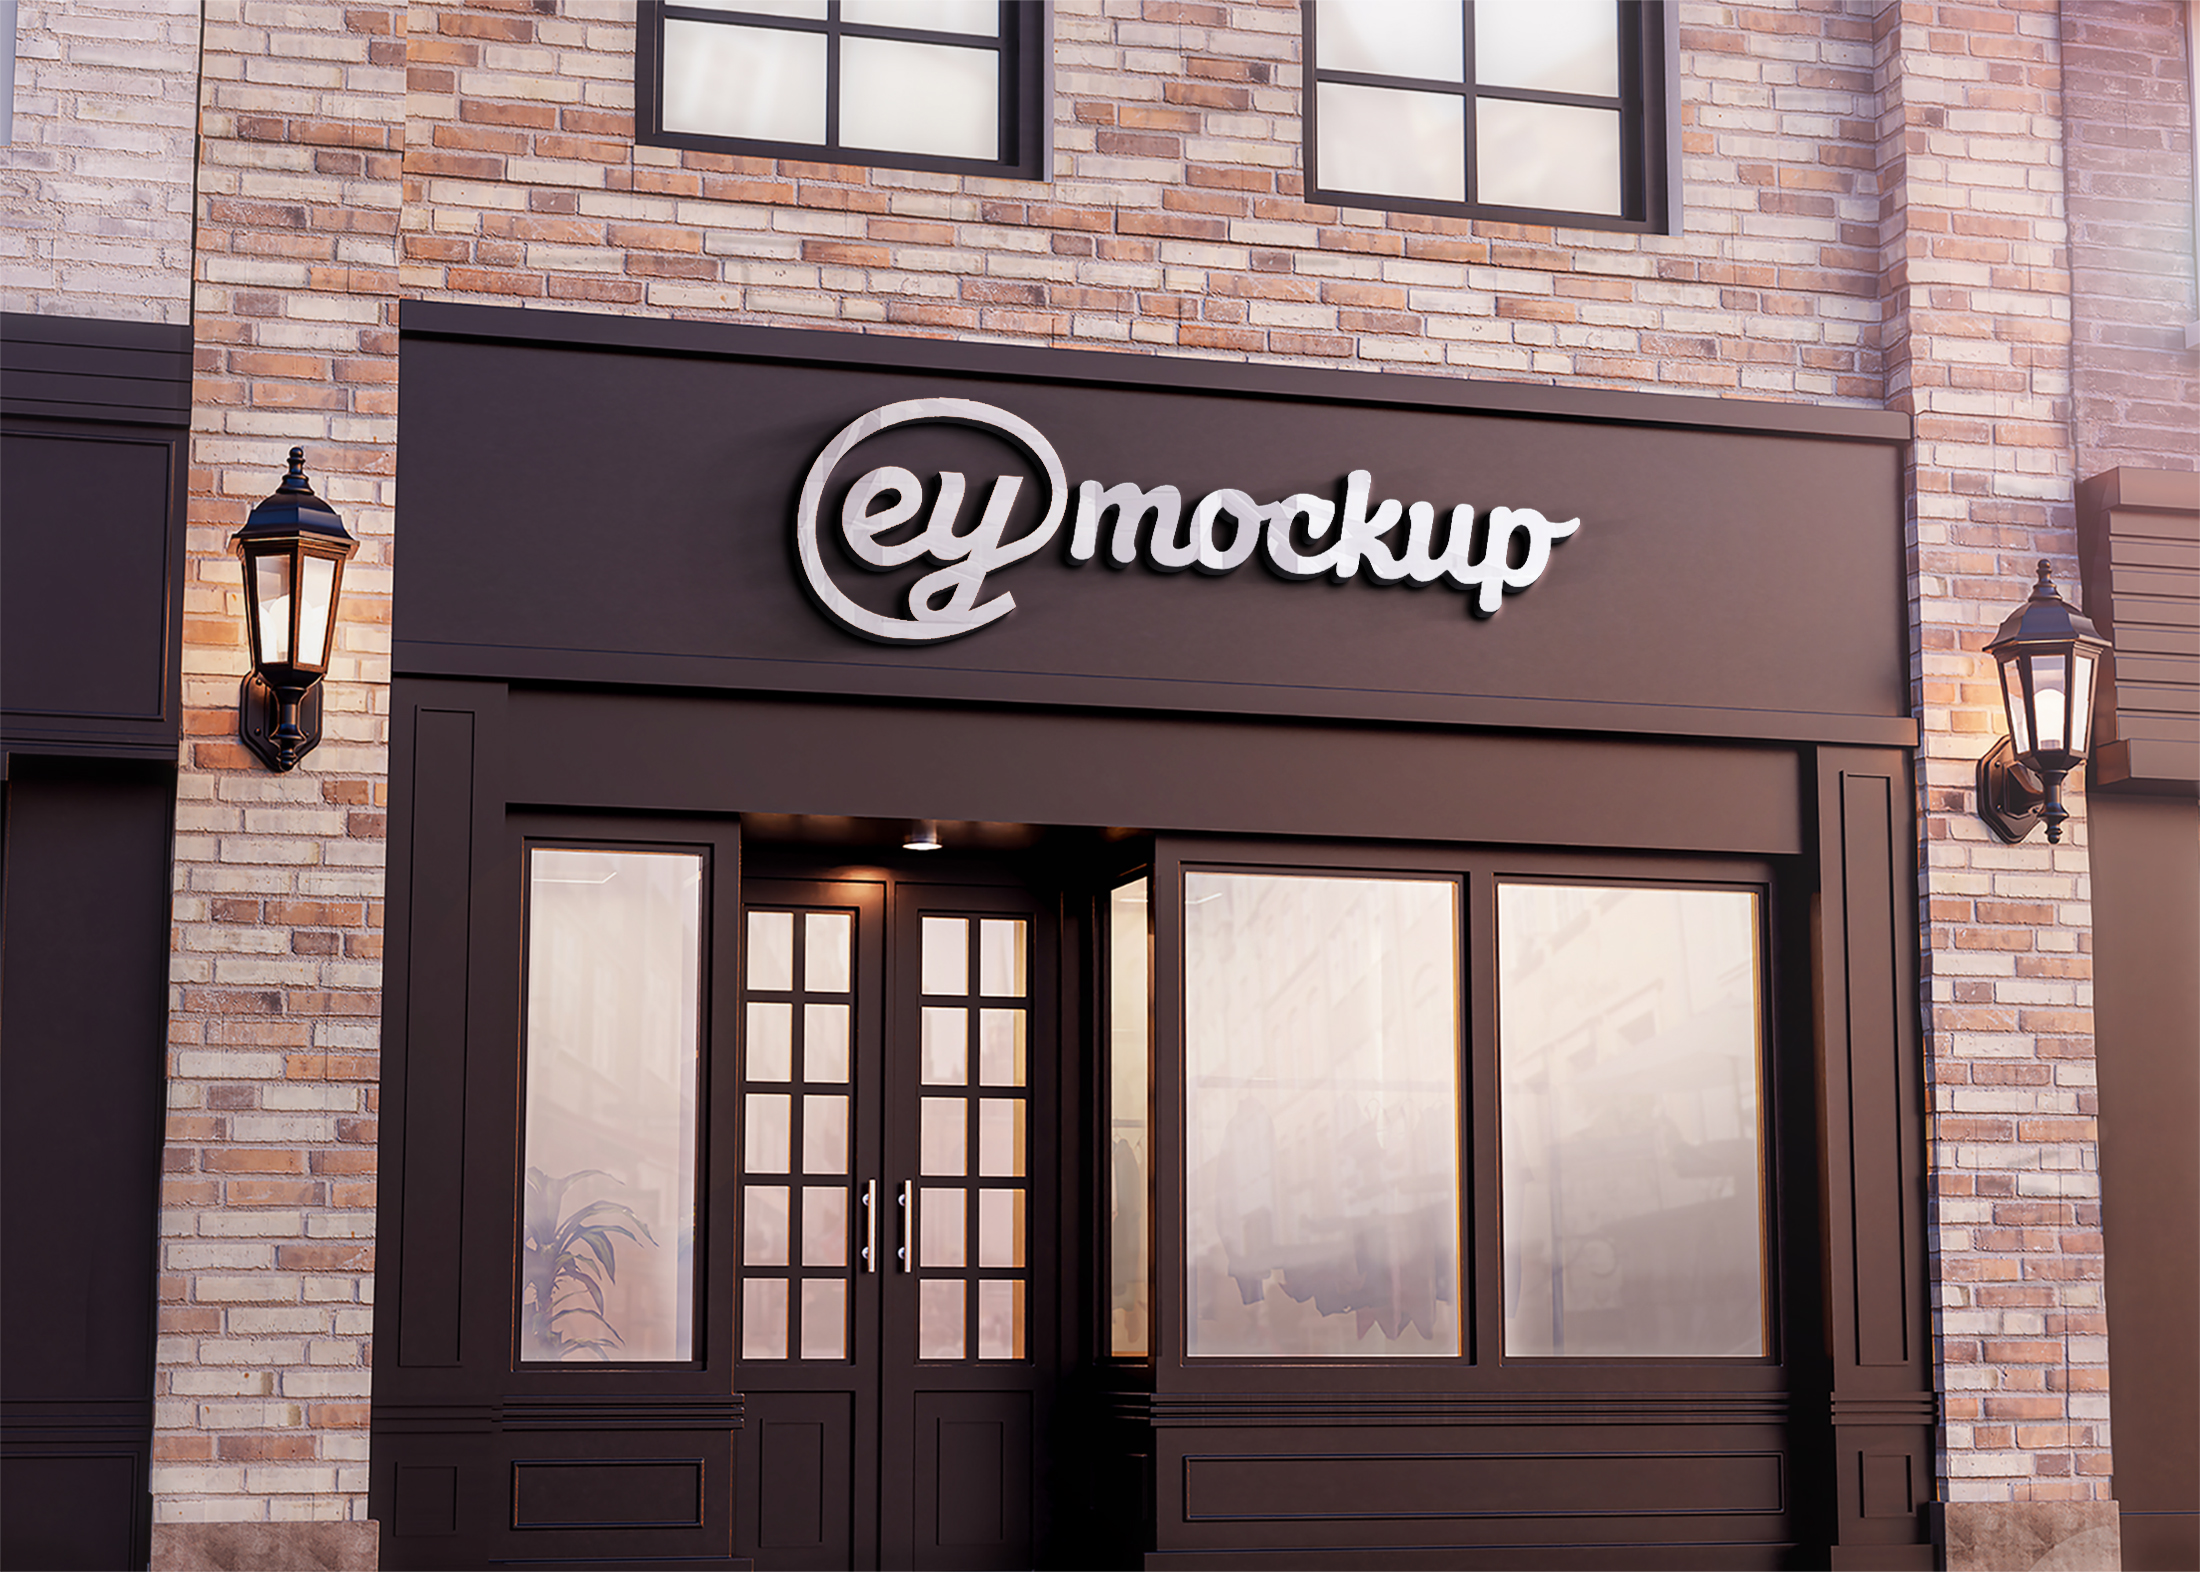 eymockup Shop Logo Mockup